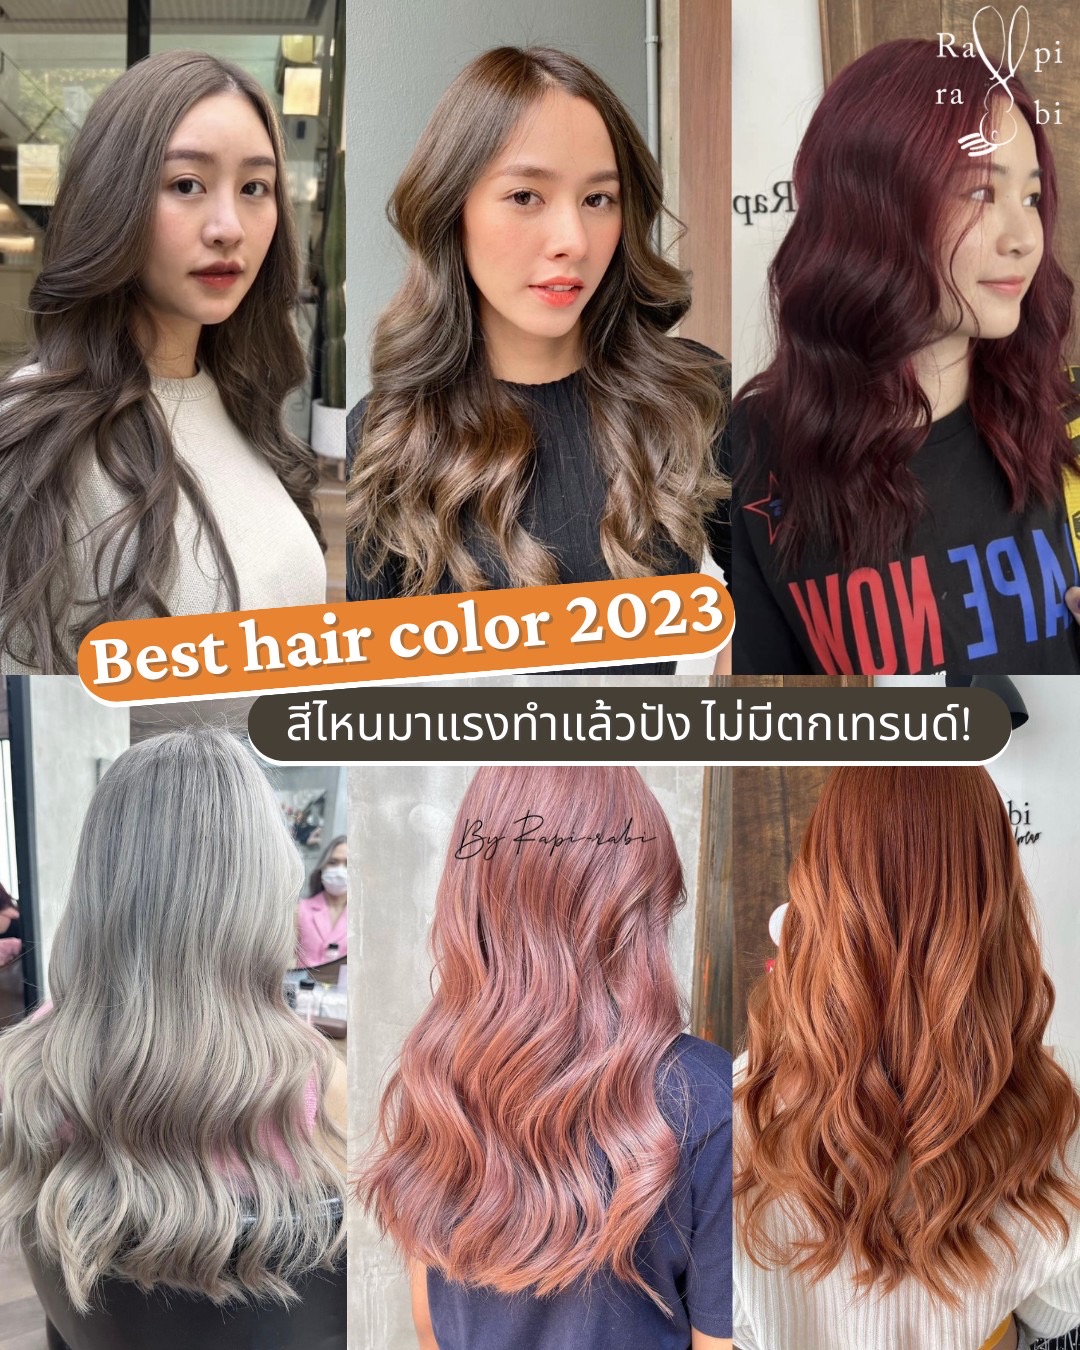 (TH) Best hair color 2023 สีไหนมาแรงทำแล้วปัง ไม่มีตกเทรนด์💥🔥 By Rapi-rabi